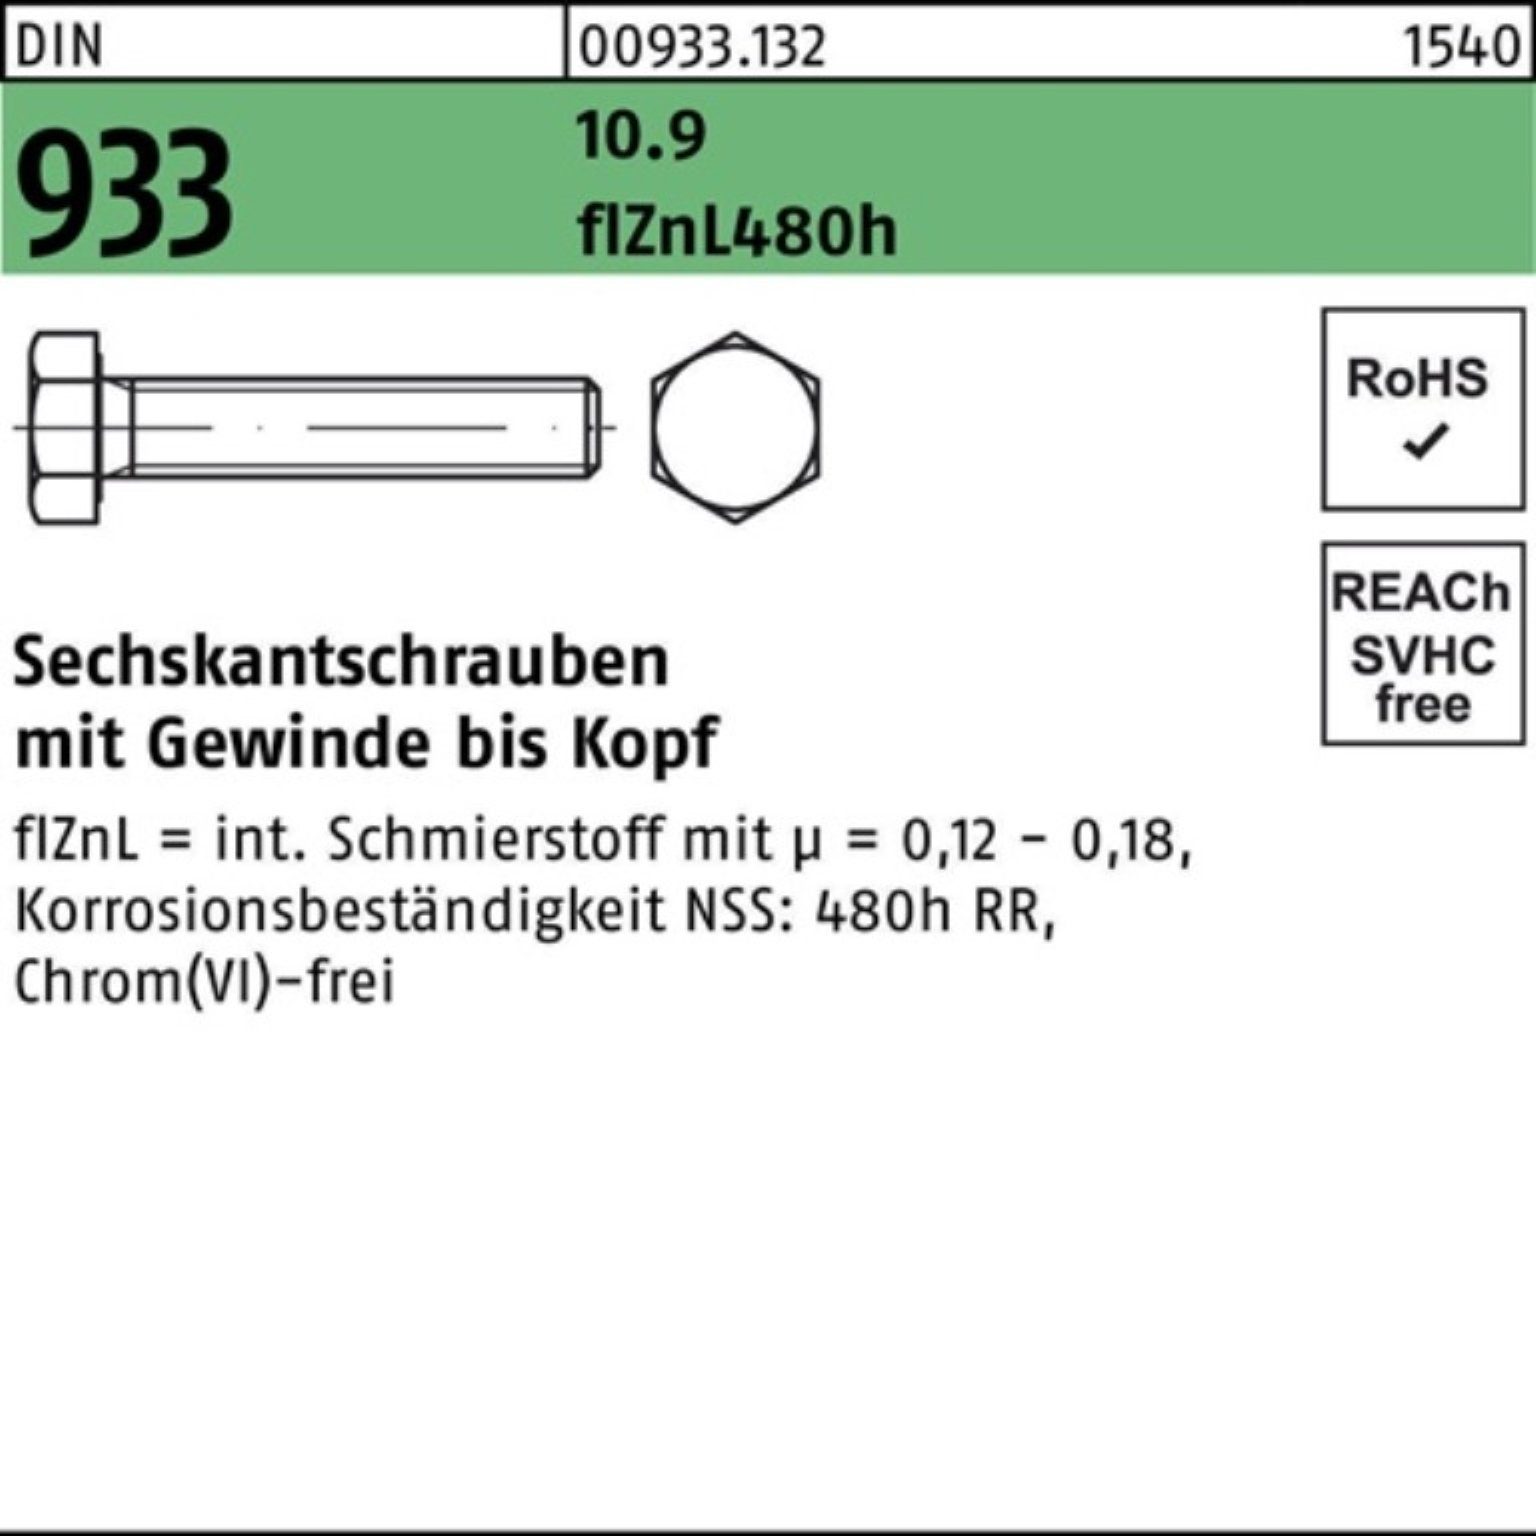 Reyher DIN Sechskantschraube Pack Sechskantschraube flZnL/nc/x/x/480h M16x 100er 933 10.9 40 VG